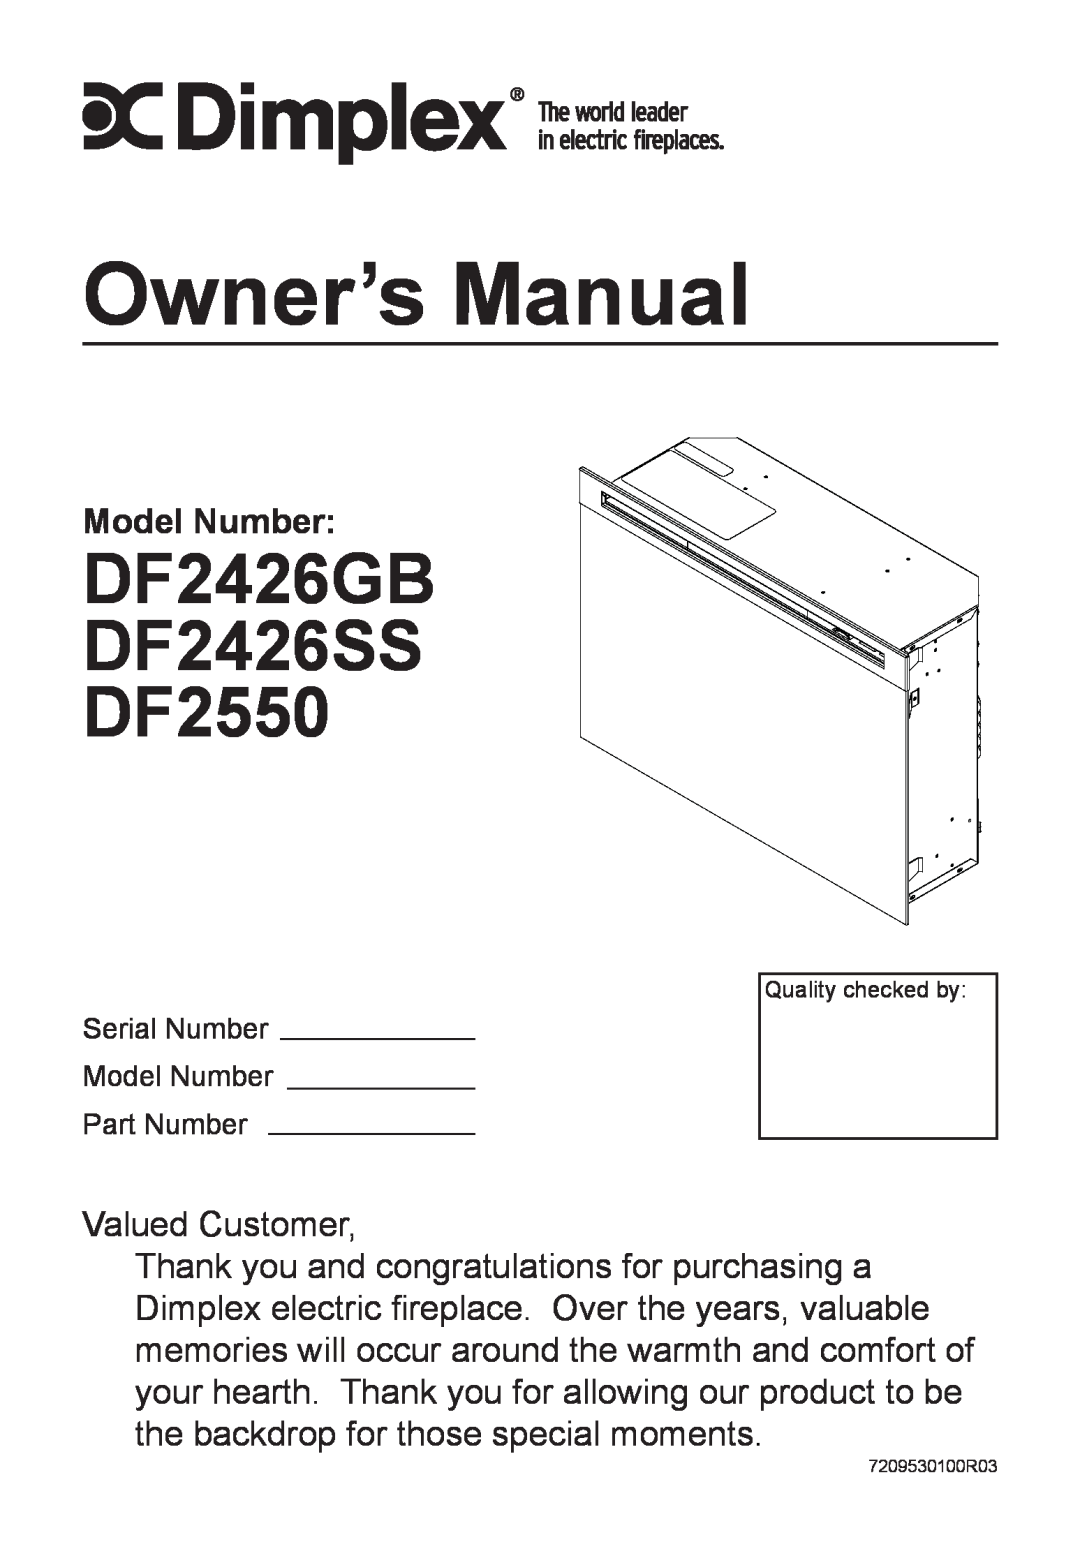 Dimplex owner manual DF2426GB DF2426SS DF2550, Model Number, Valued Customer, 7209530100R03 